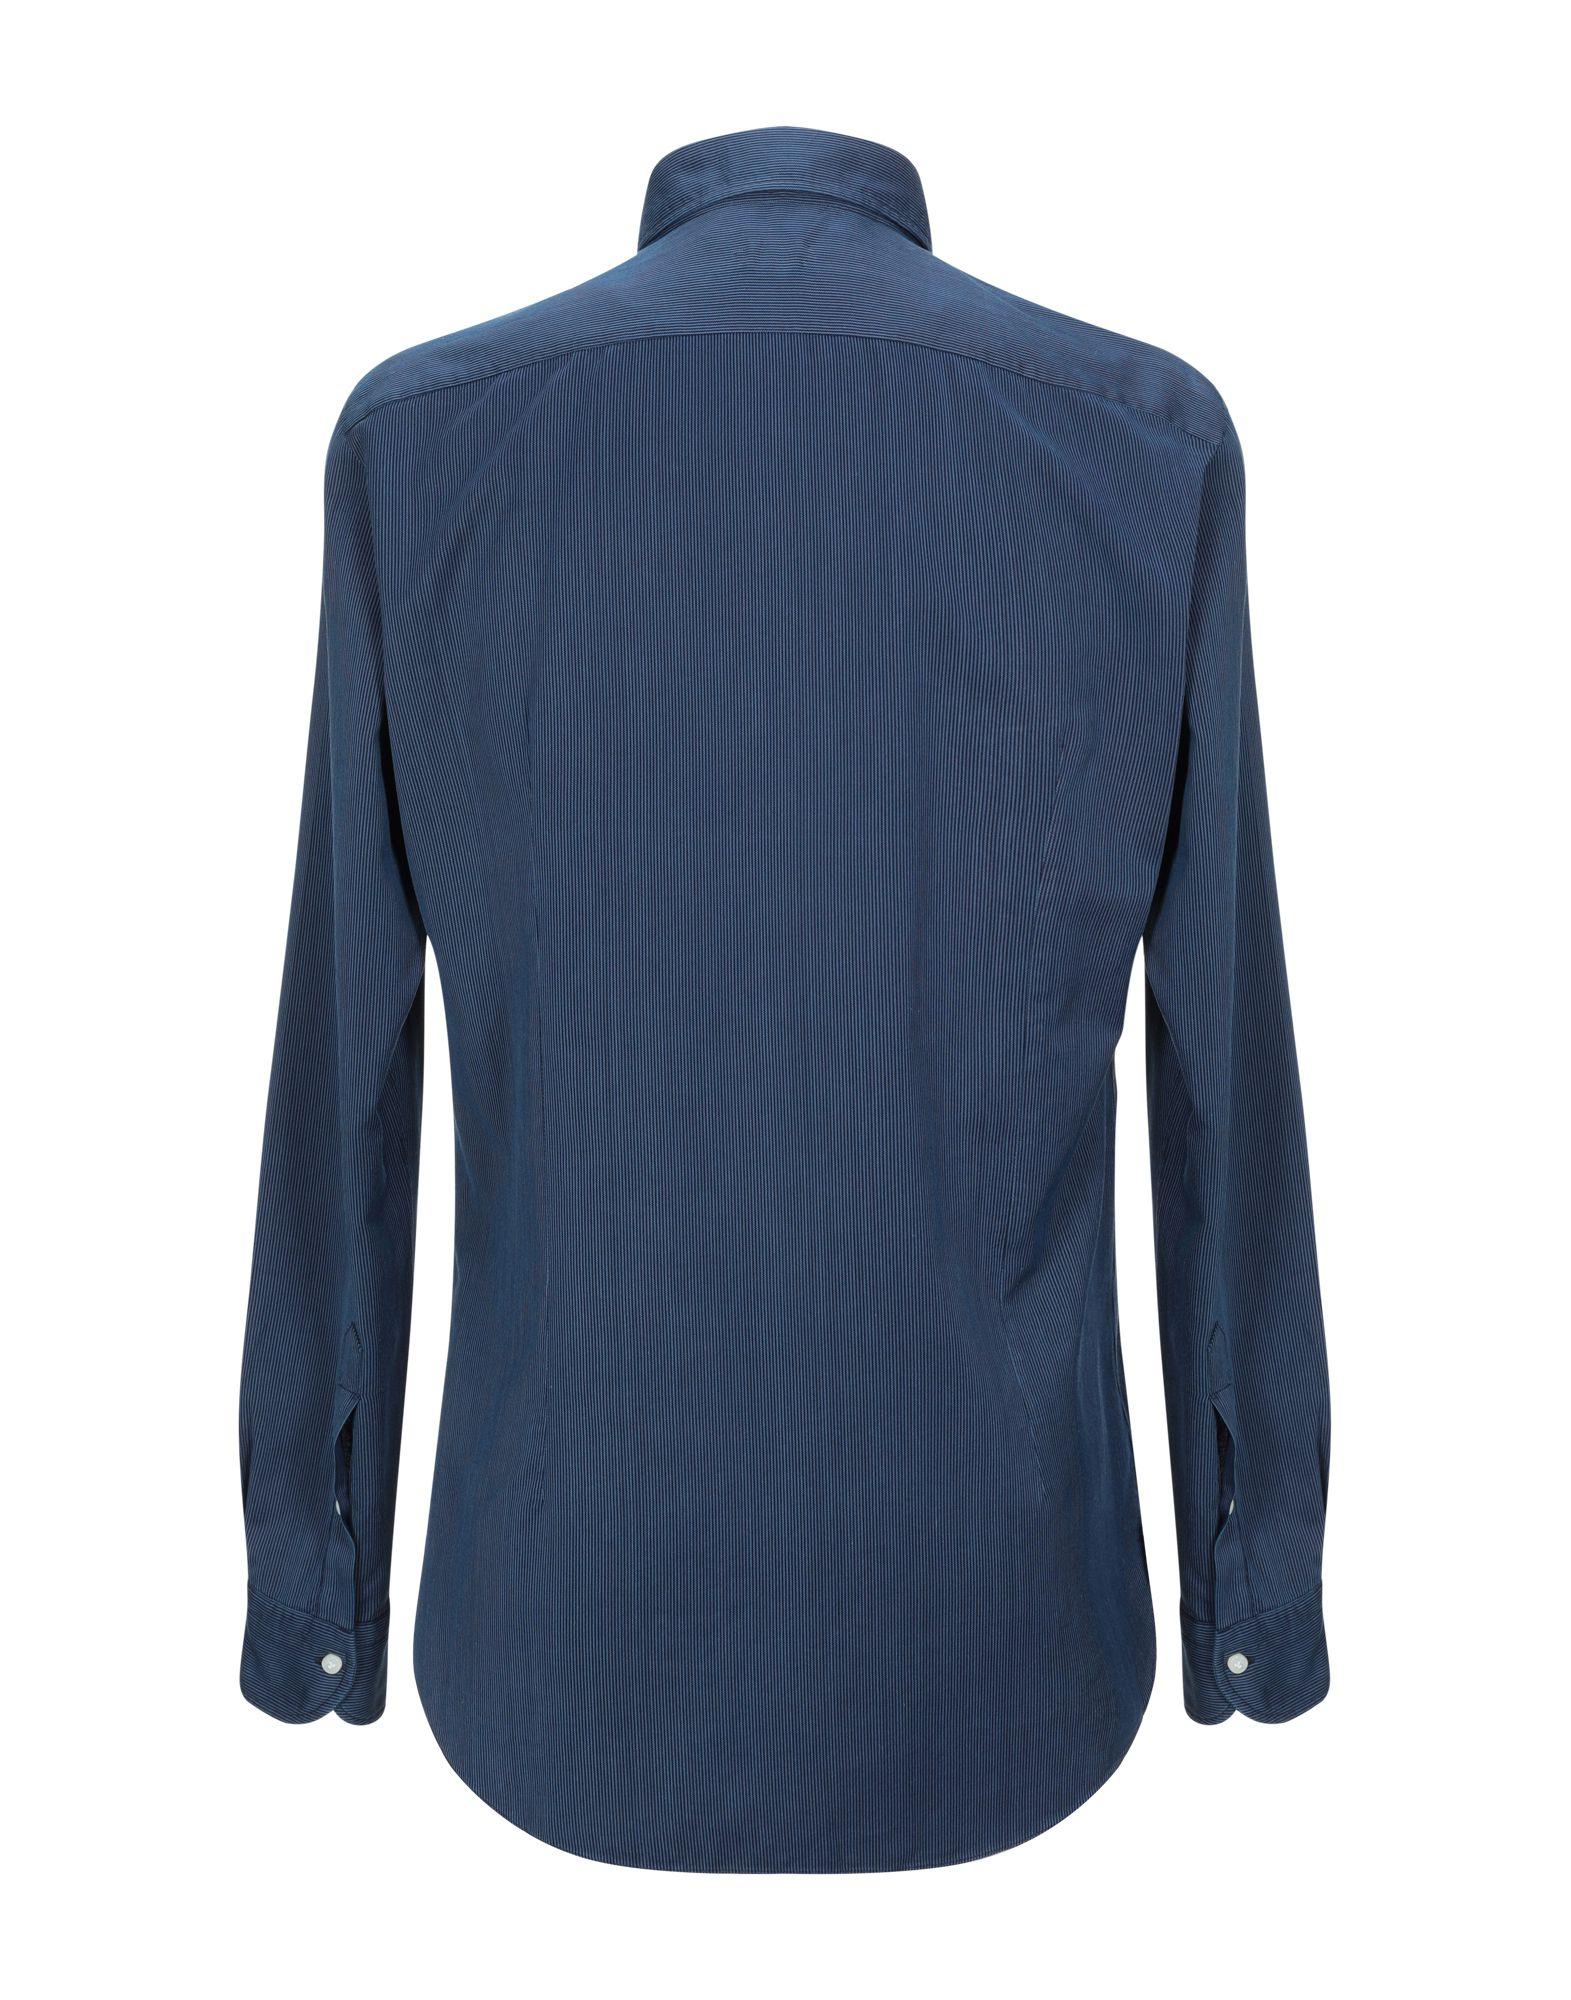 Vincenzo Di Ruggiero Cotton Shirt in Dark Blue (Blue) for Men - Lyst